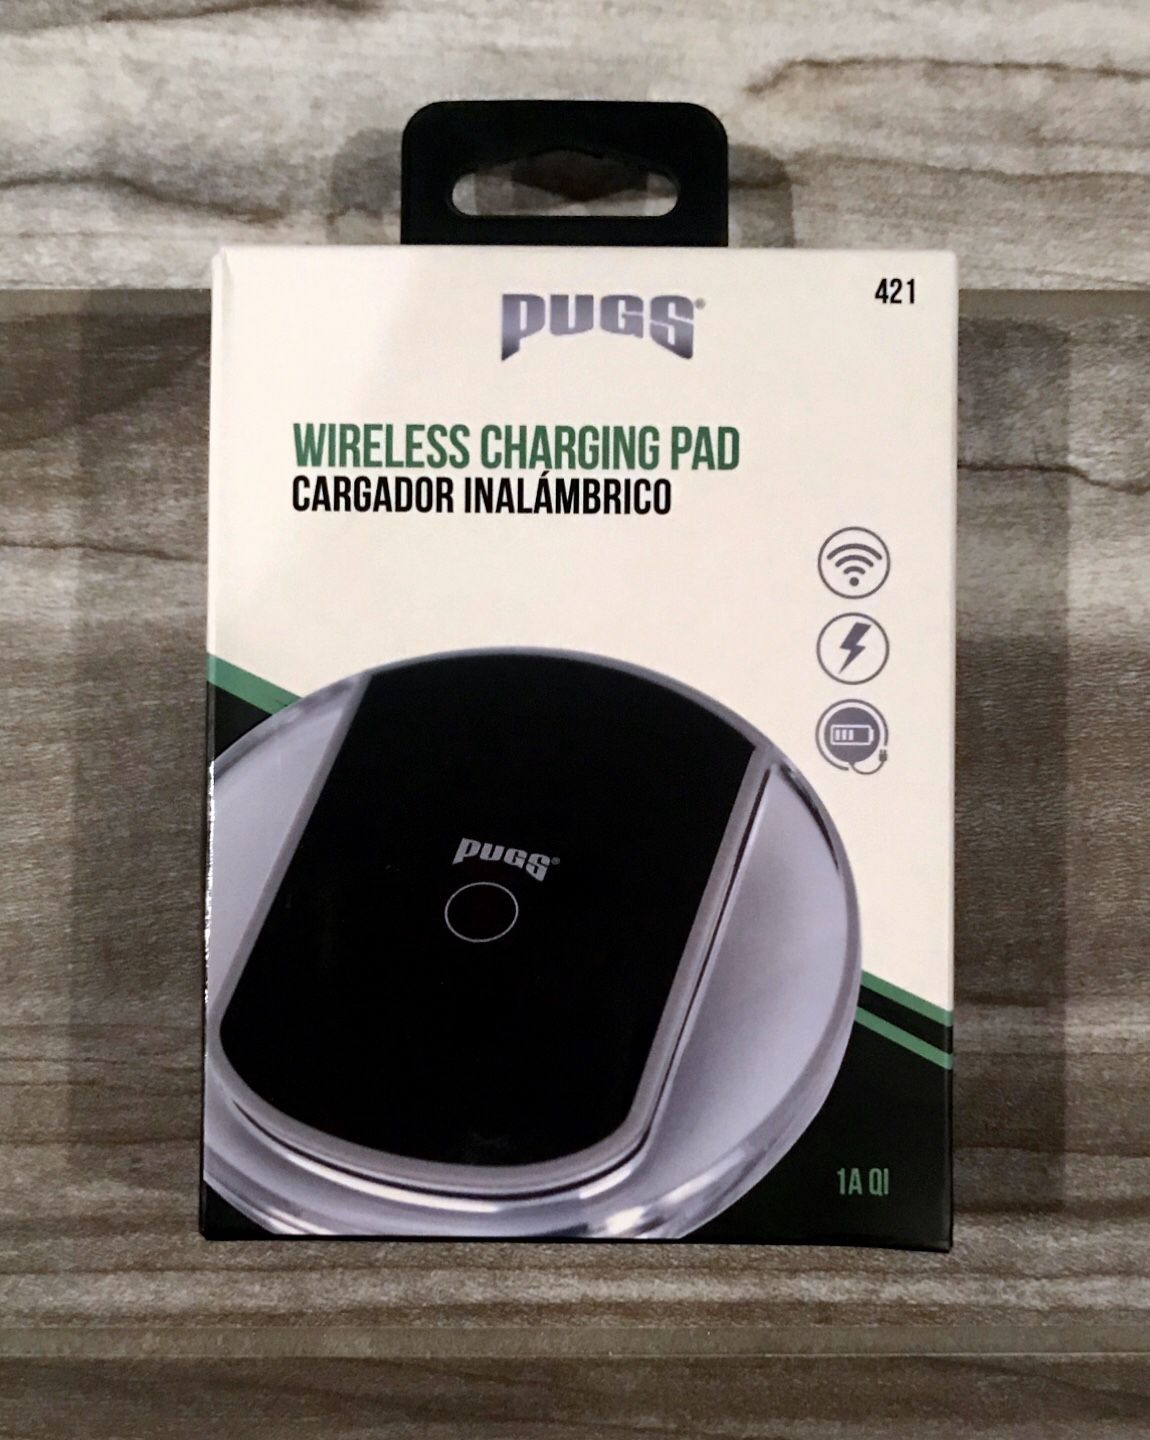 NEW - “PUGS”, Wireless Charging Pad